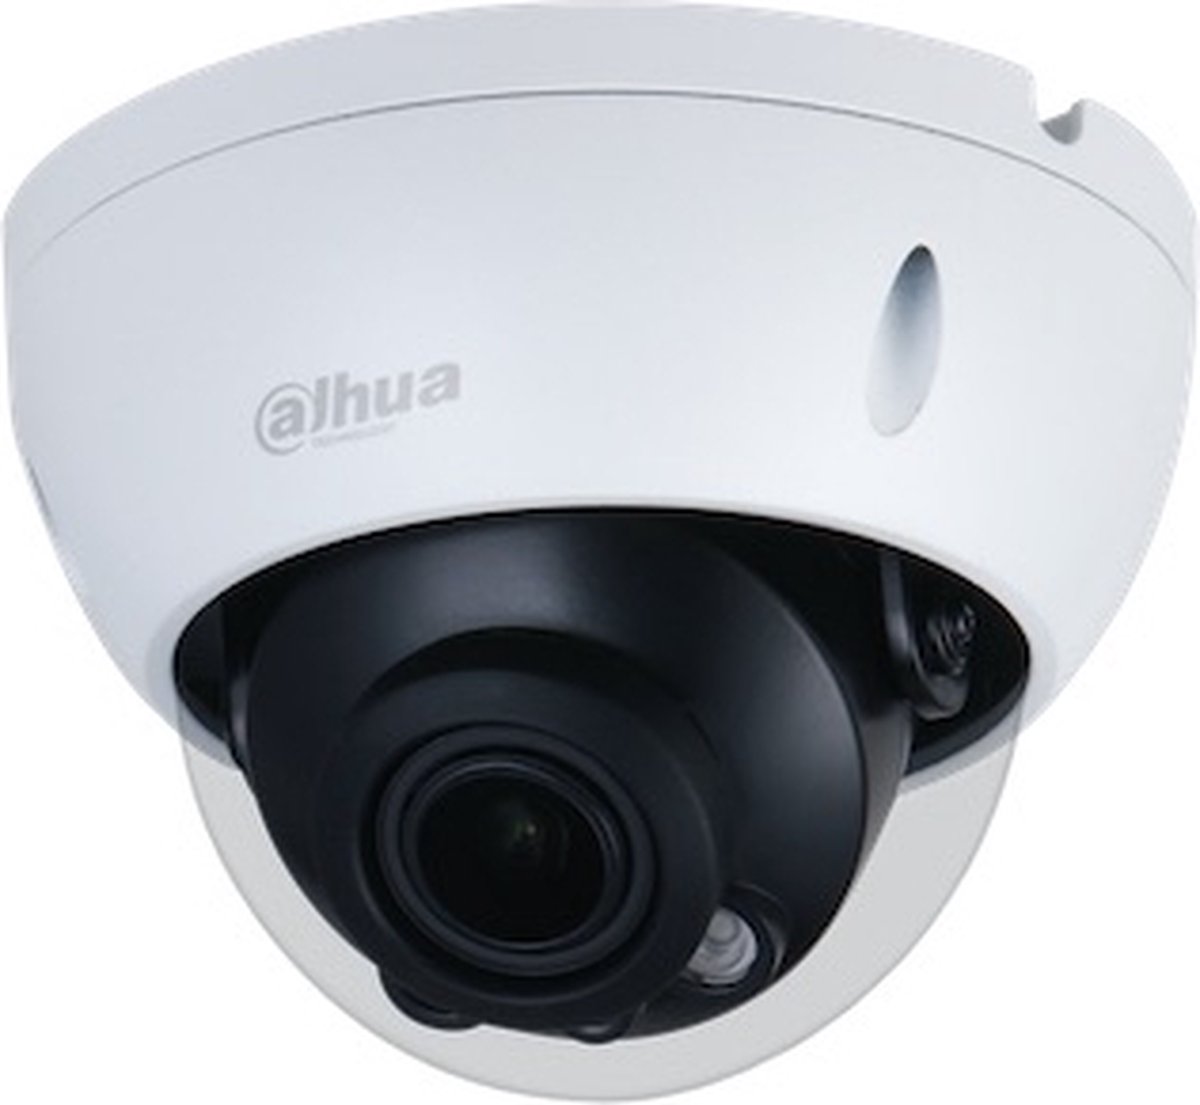 Dahua IPC-HDBW3541R-ZS Full HD 5MP Starlight Lite AI buiten dome camera met 40m IR, varifocale lens, PoE, microSD - Beveiligingscamera IP camera bewakingscamera camerabewaking veiligheidscamera beveiliging netwerk camera webcam